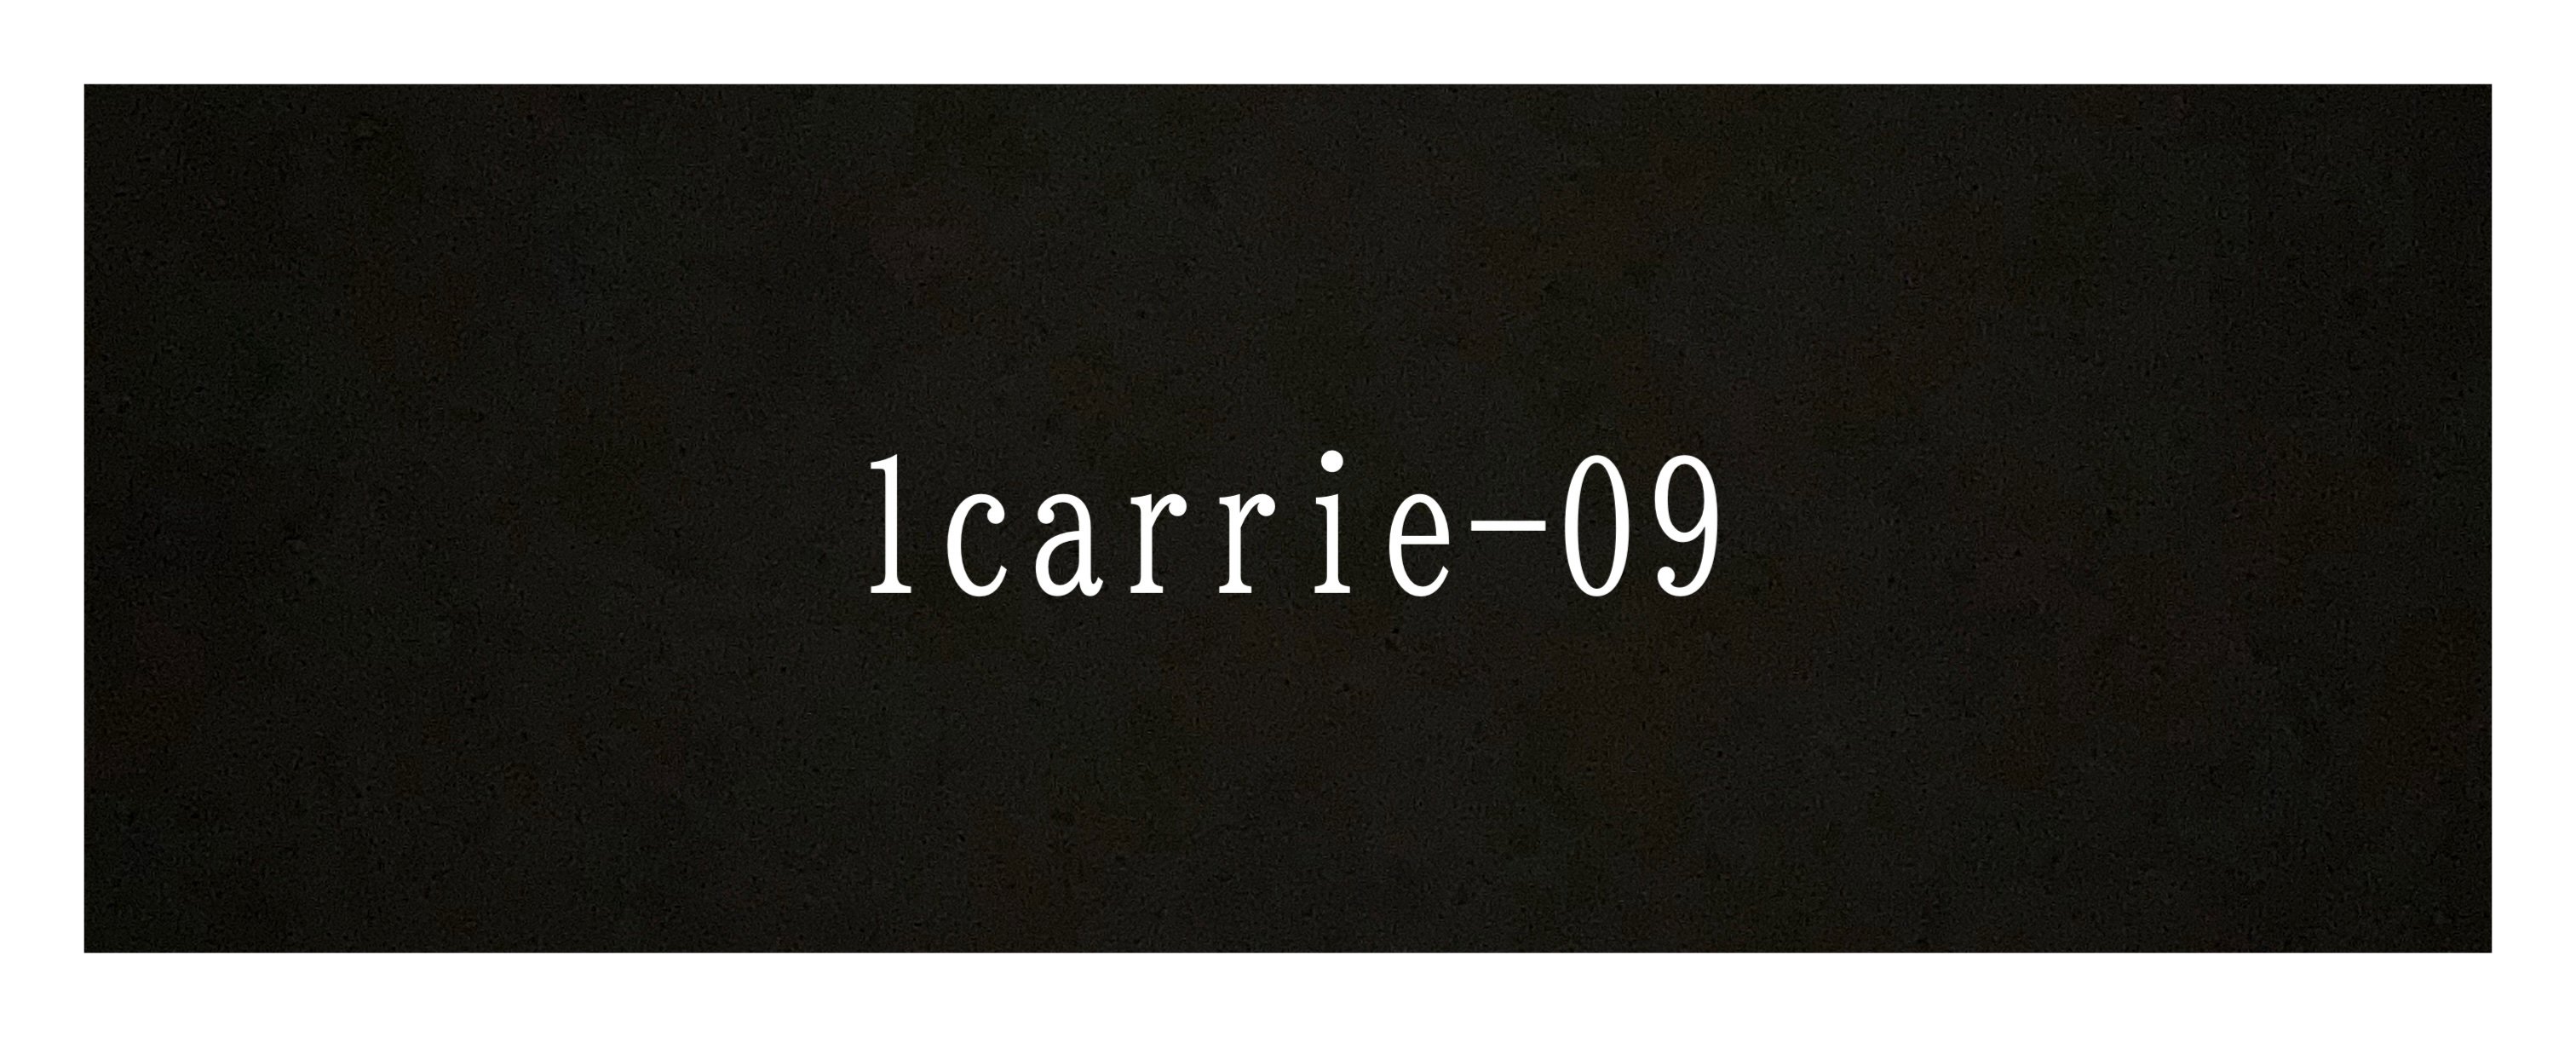 1carrie-09